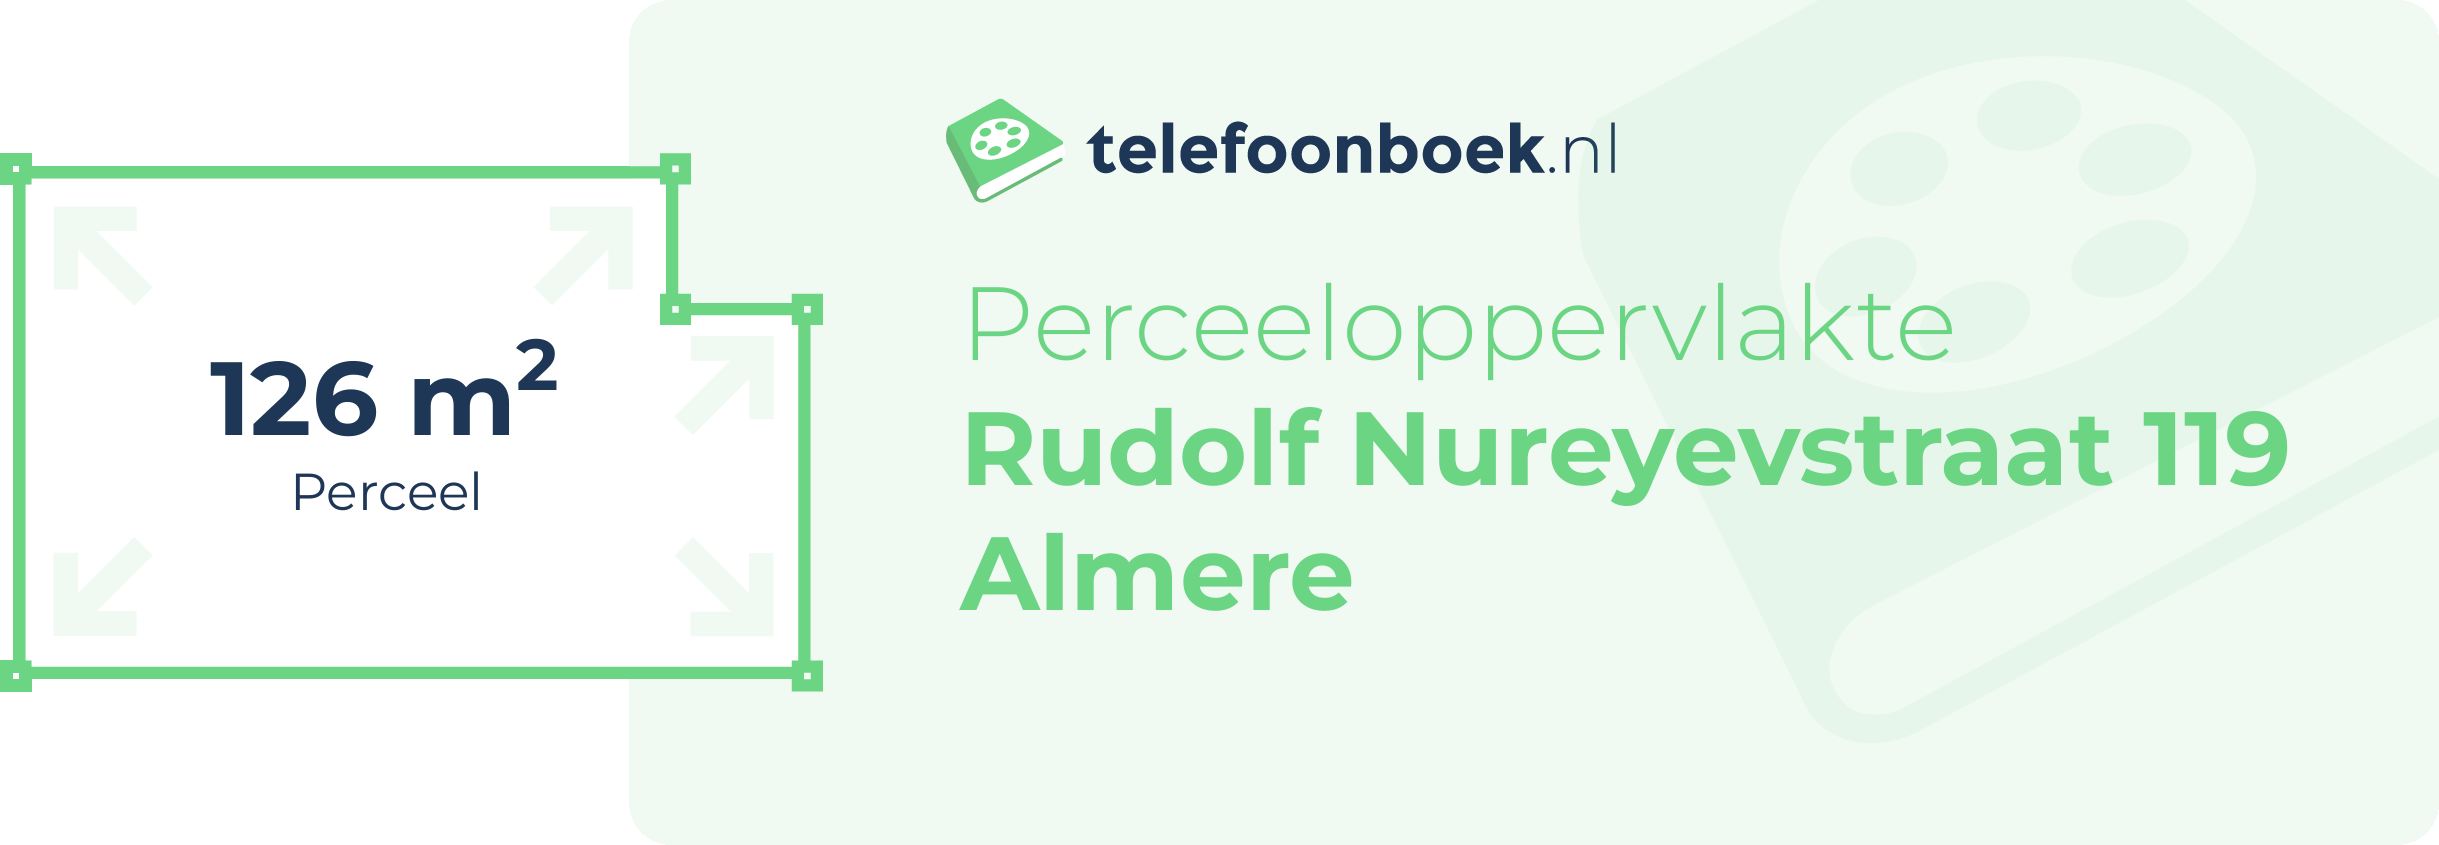 Perceeloppervlakte Rudolf Nureyevstraat 119 Almere